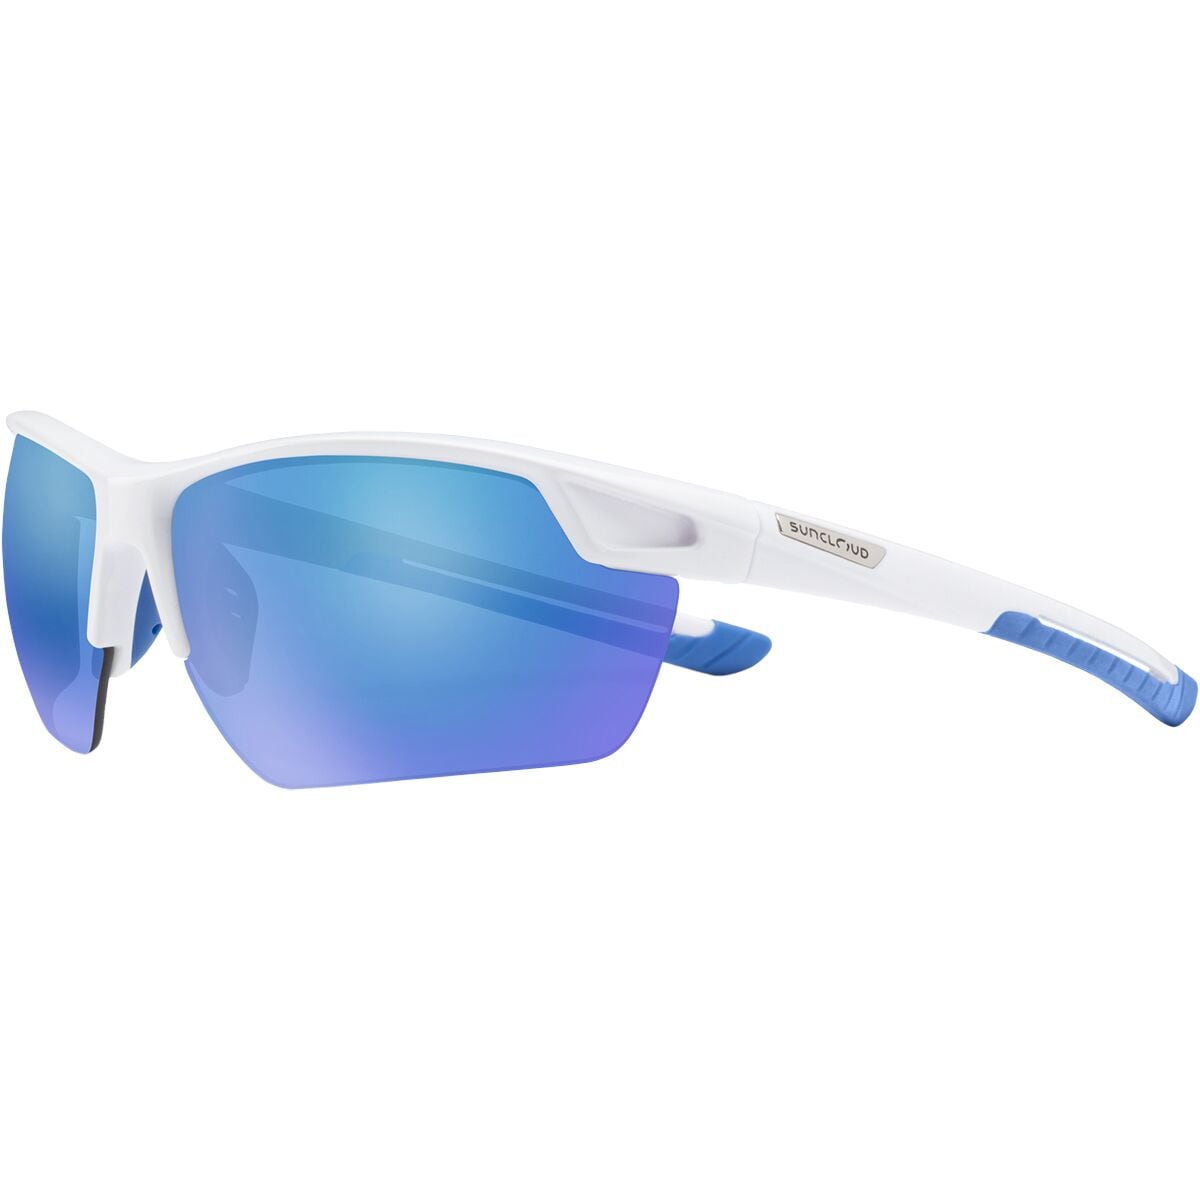 Поляризованные солнцезащитные очки contender Suncloud Polarized Optics, цвет white/polar blue2 mirror очки солнцезащитные stylemark polarized l1504a